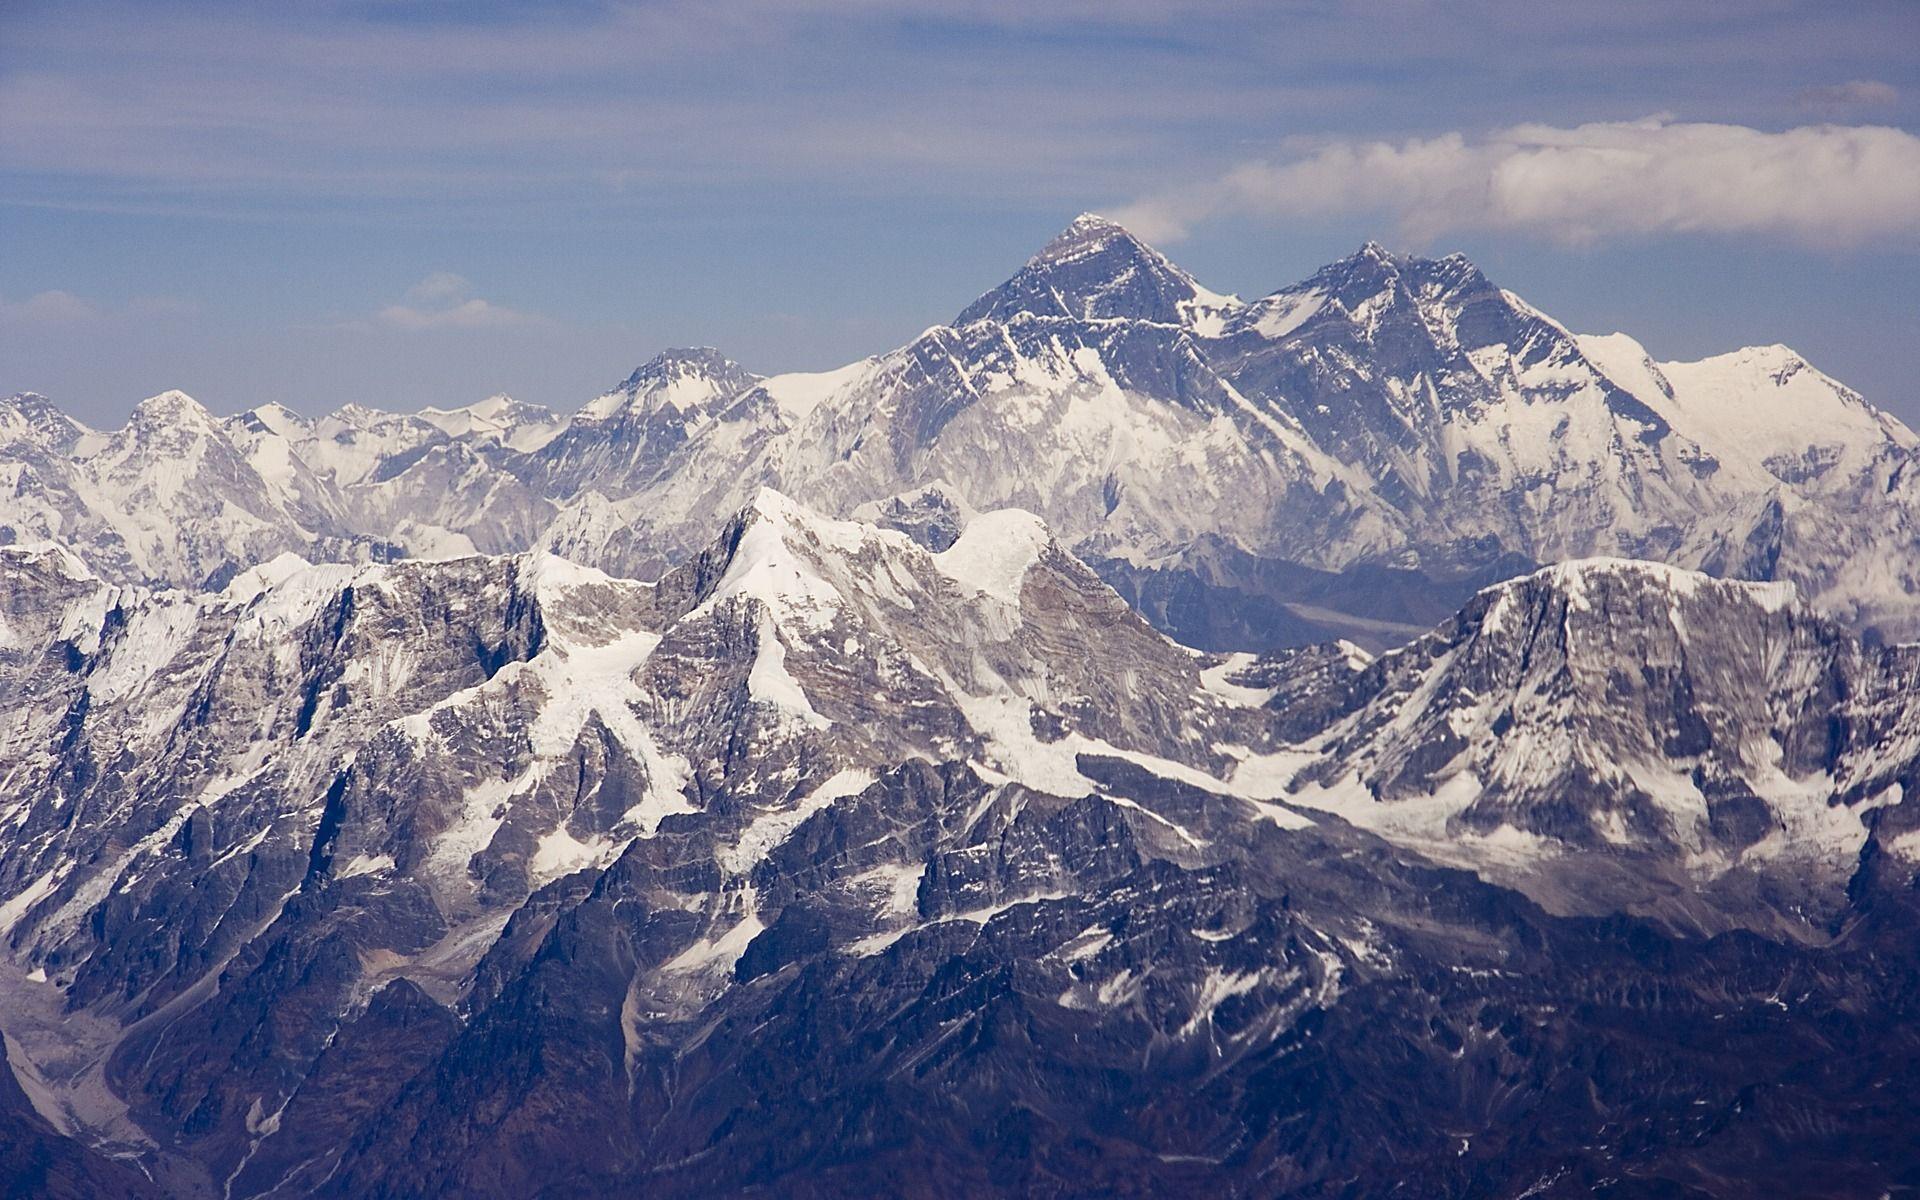 Mount Everest Wallpaper Landscape Nature Wallpaper in jpg format